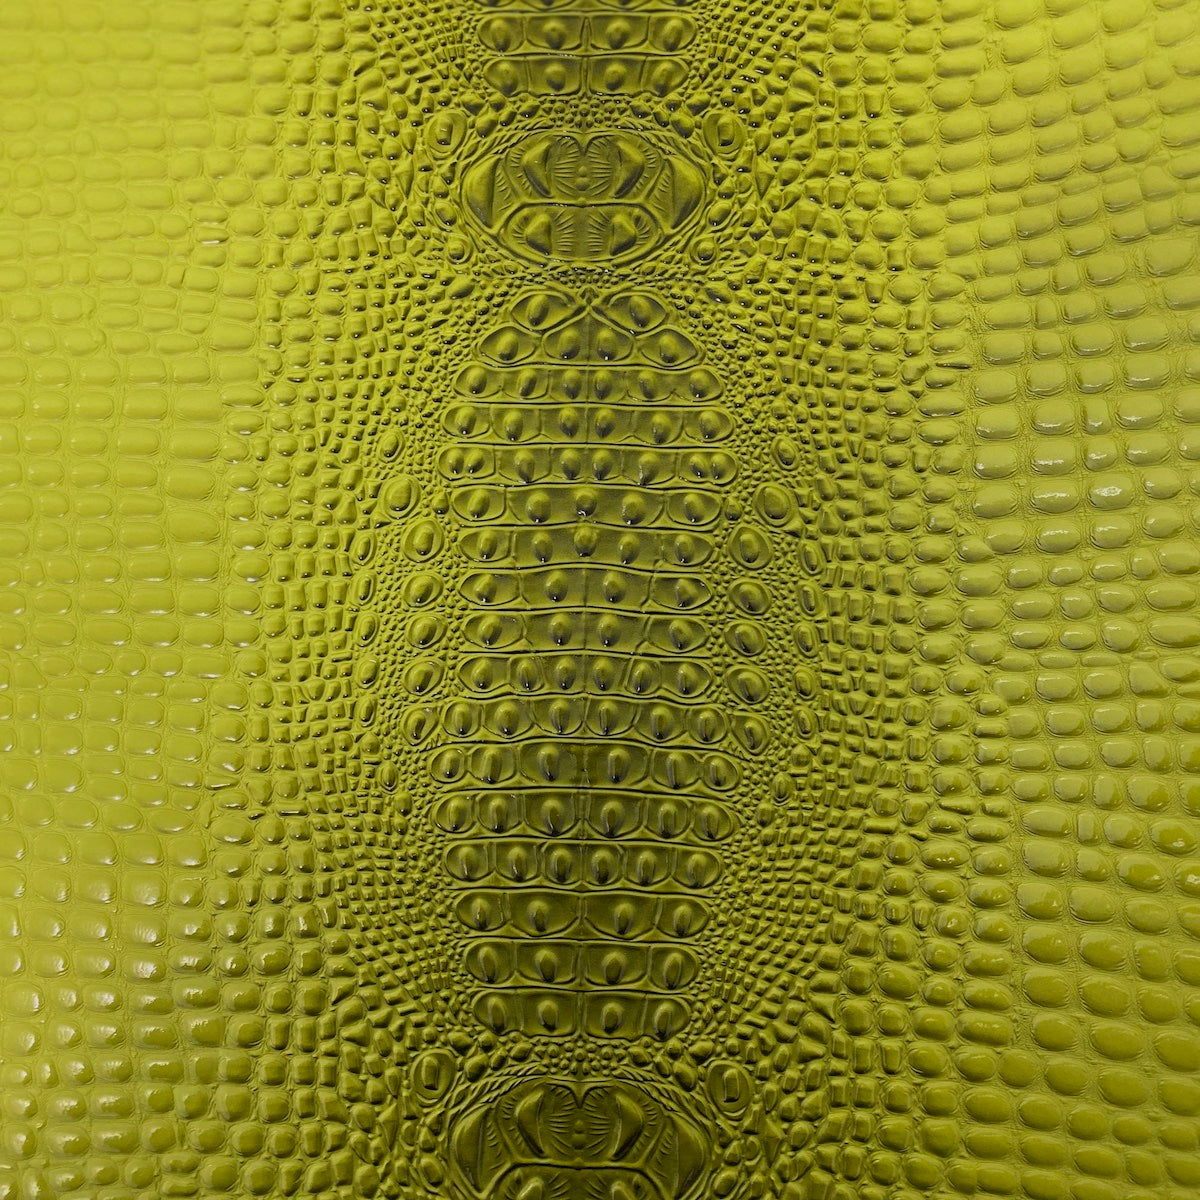 Lime Green Aussie 3D Embossed Gator Vinyl Fabric - Fashion Fabrics LLC